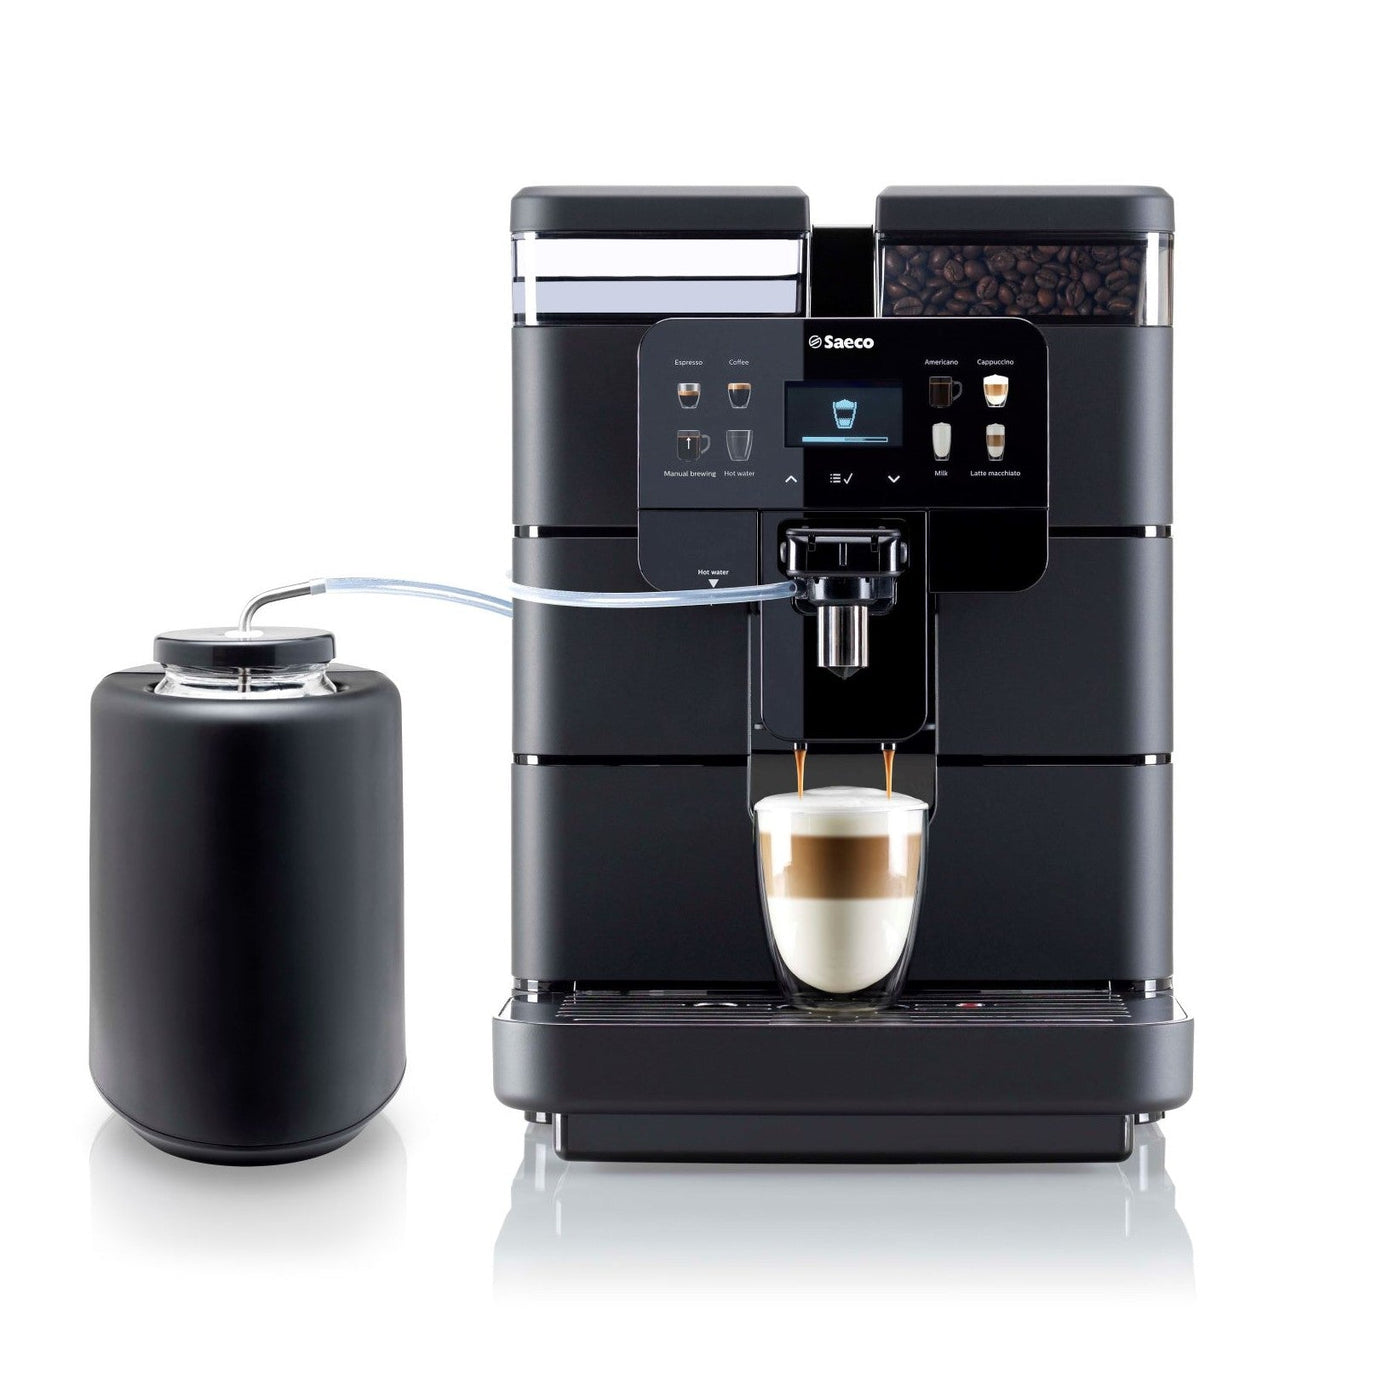 Saeco OTC Coffee machine and milk fridge product dhot for Cafesti Coffee